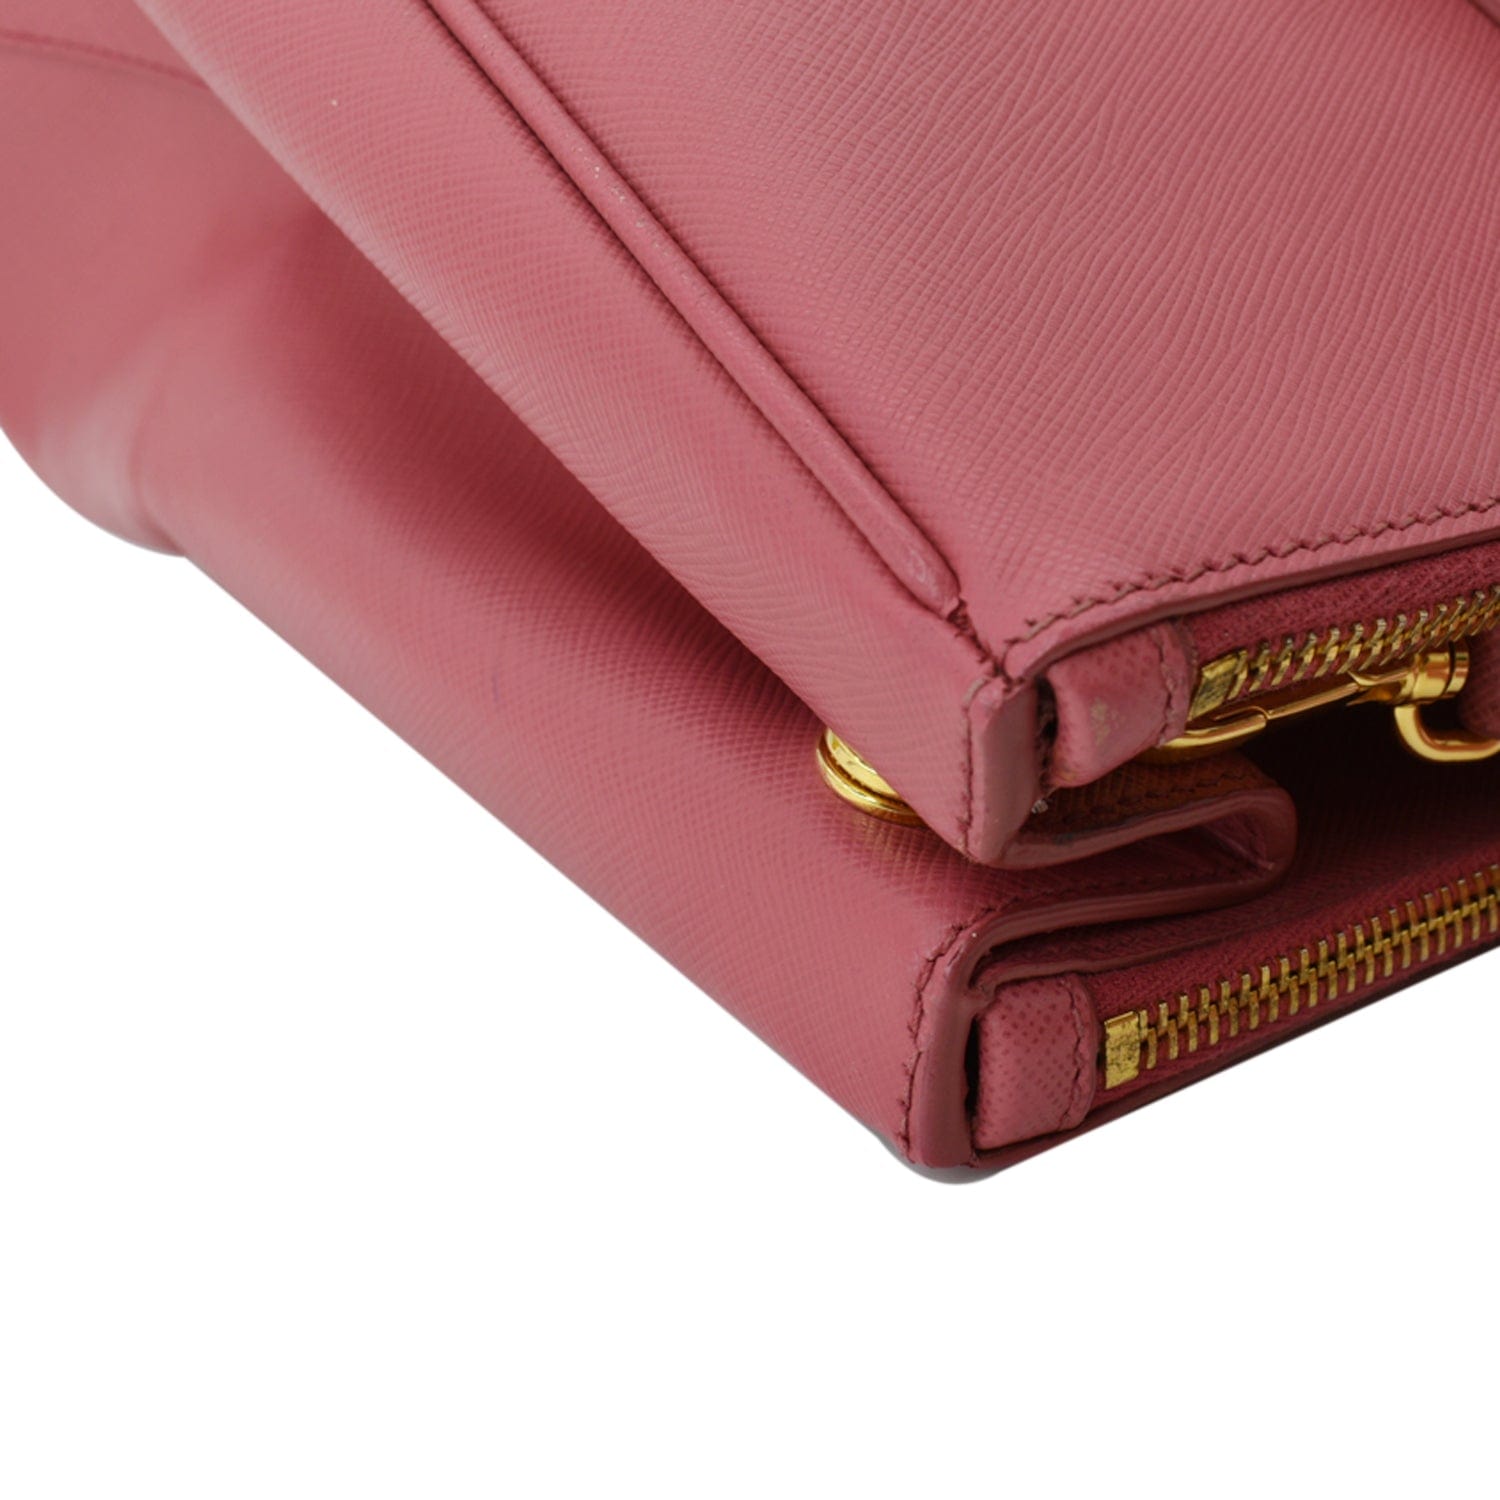 prada Saffiano Galleria Double Zip Bag pink Leather Pony-style